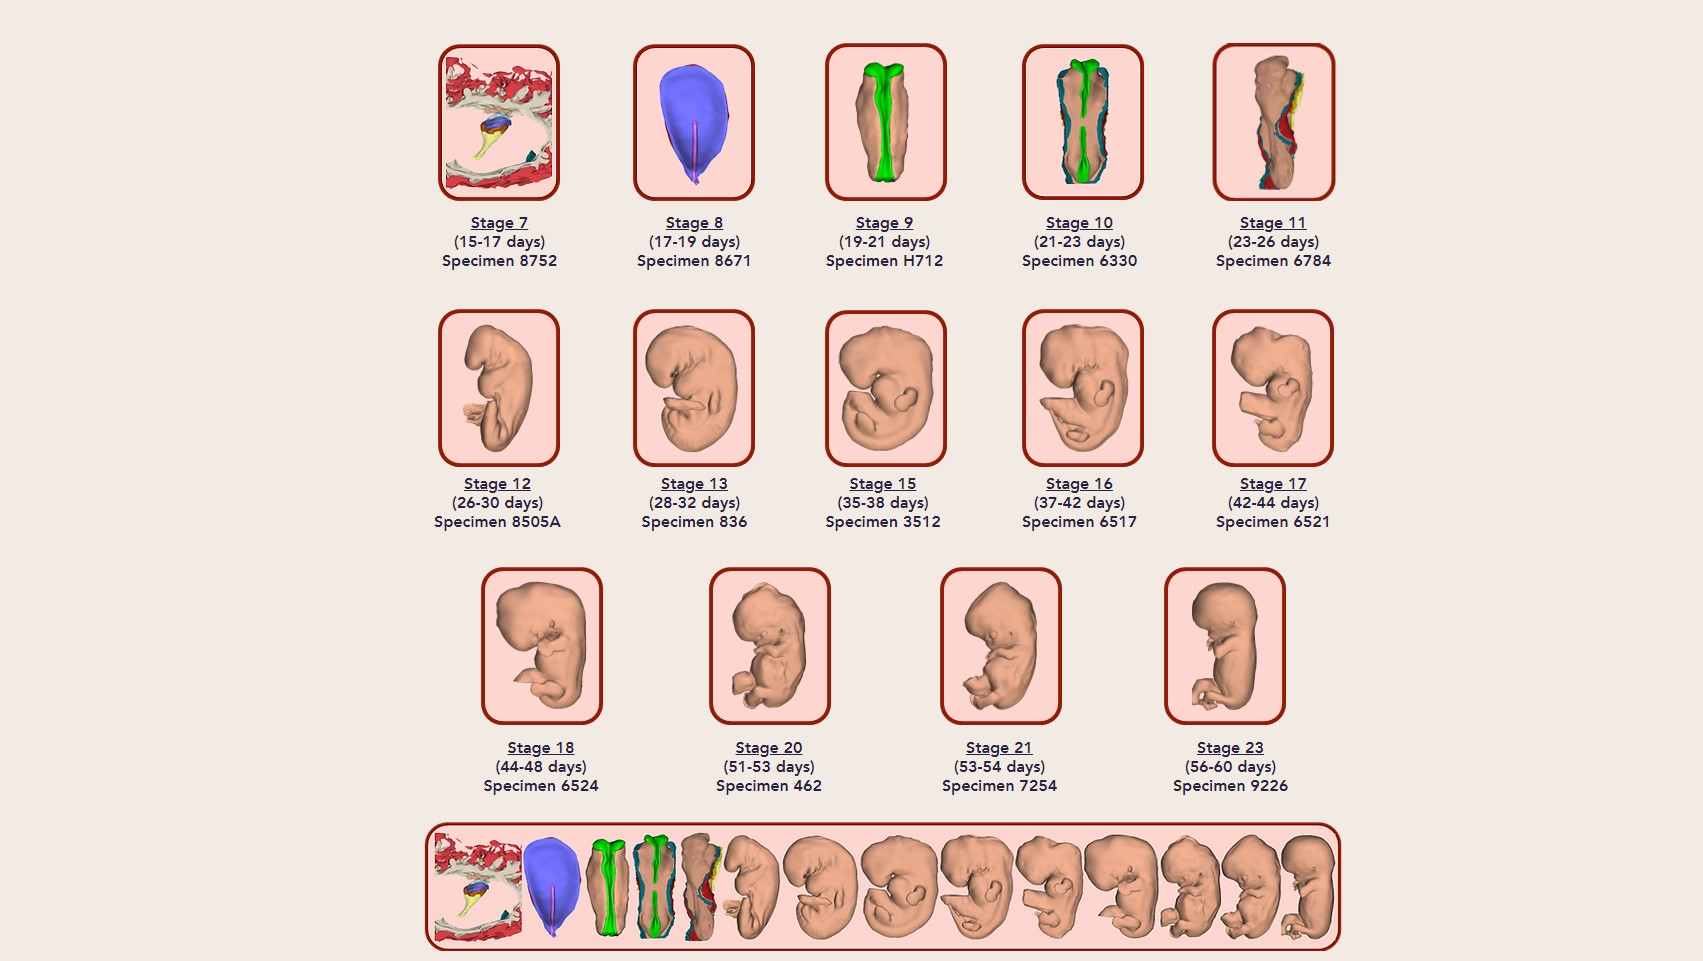 3D Atlas of Human Embryology